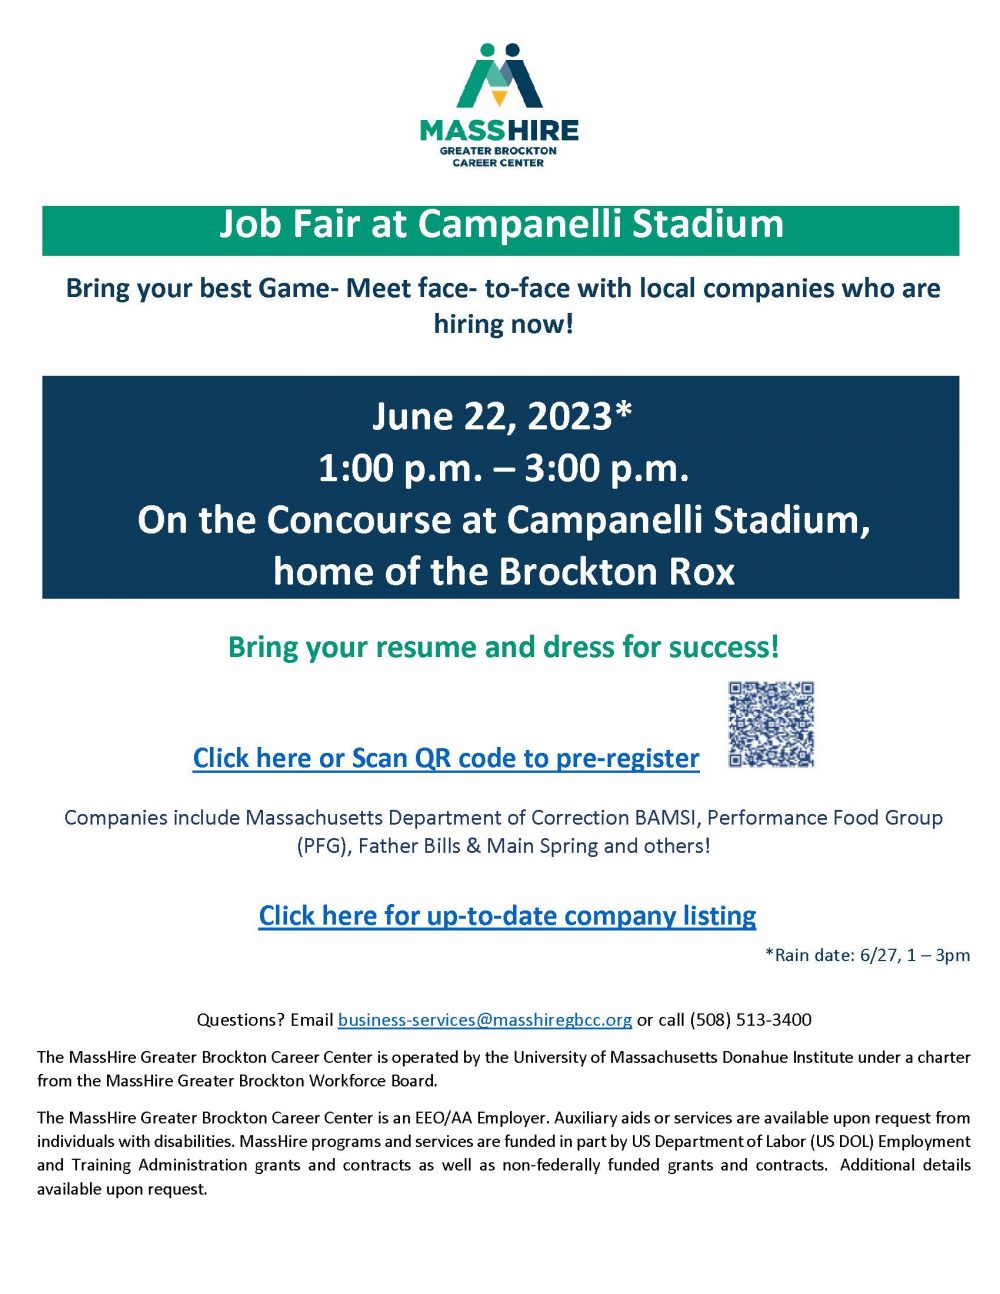 Job Fair at Campanelli Stadium Flyer 2023